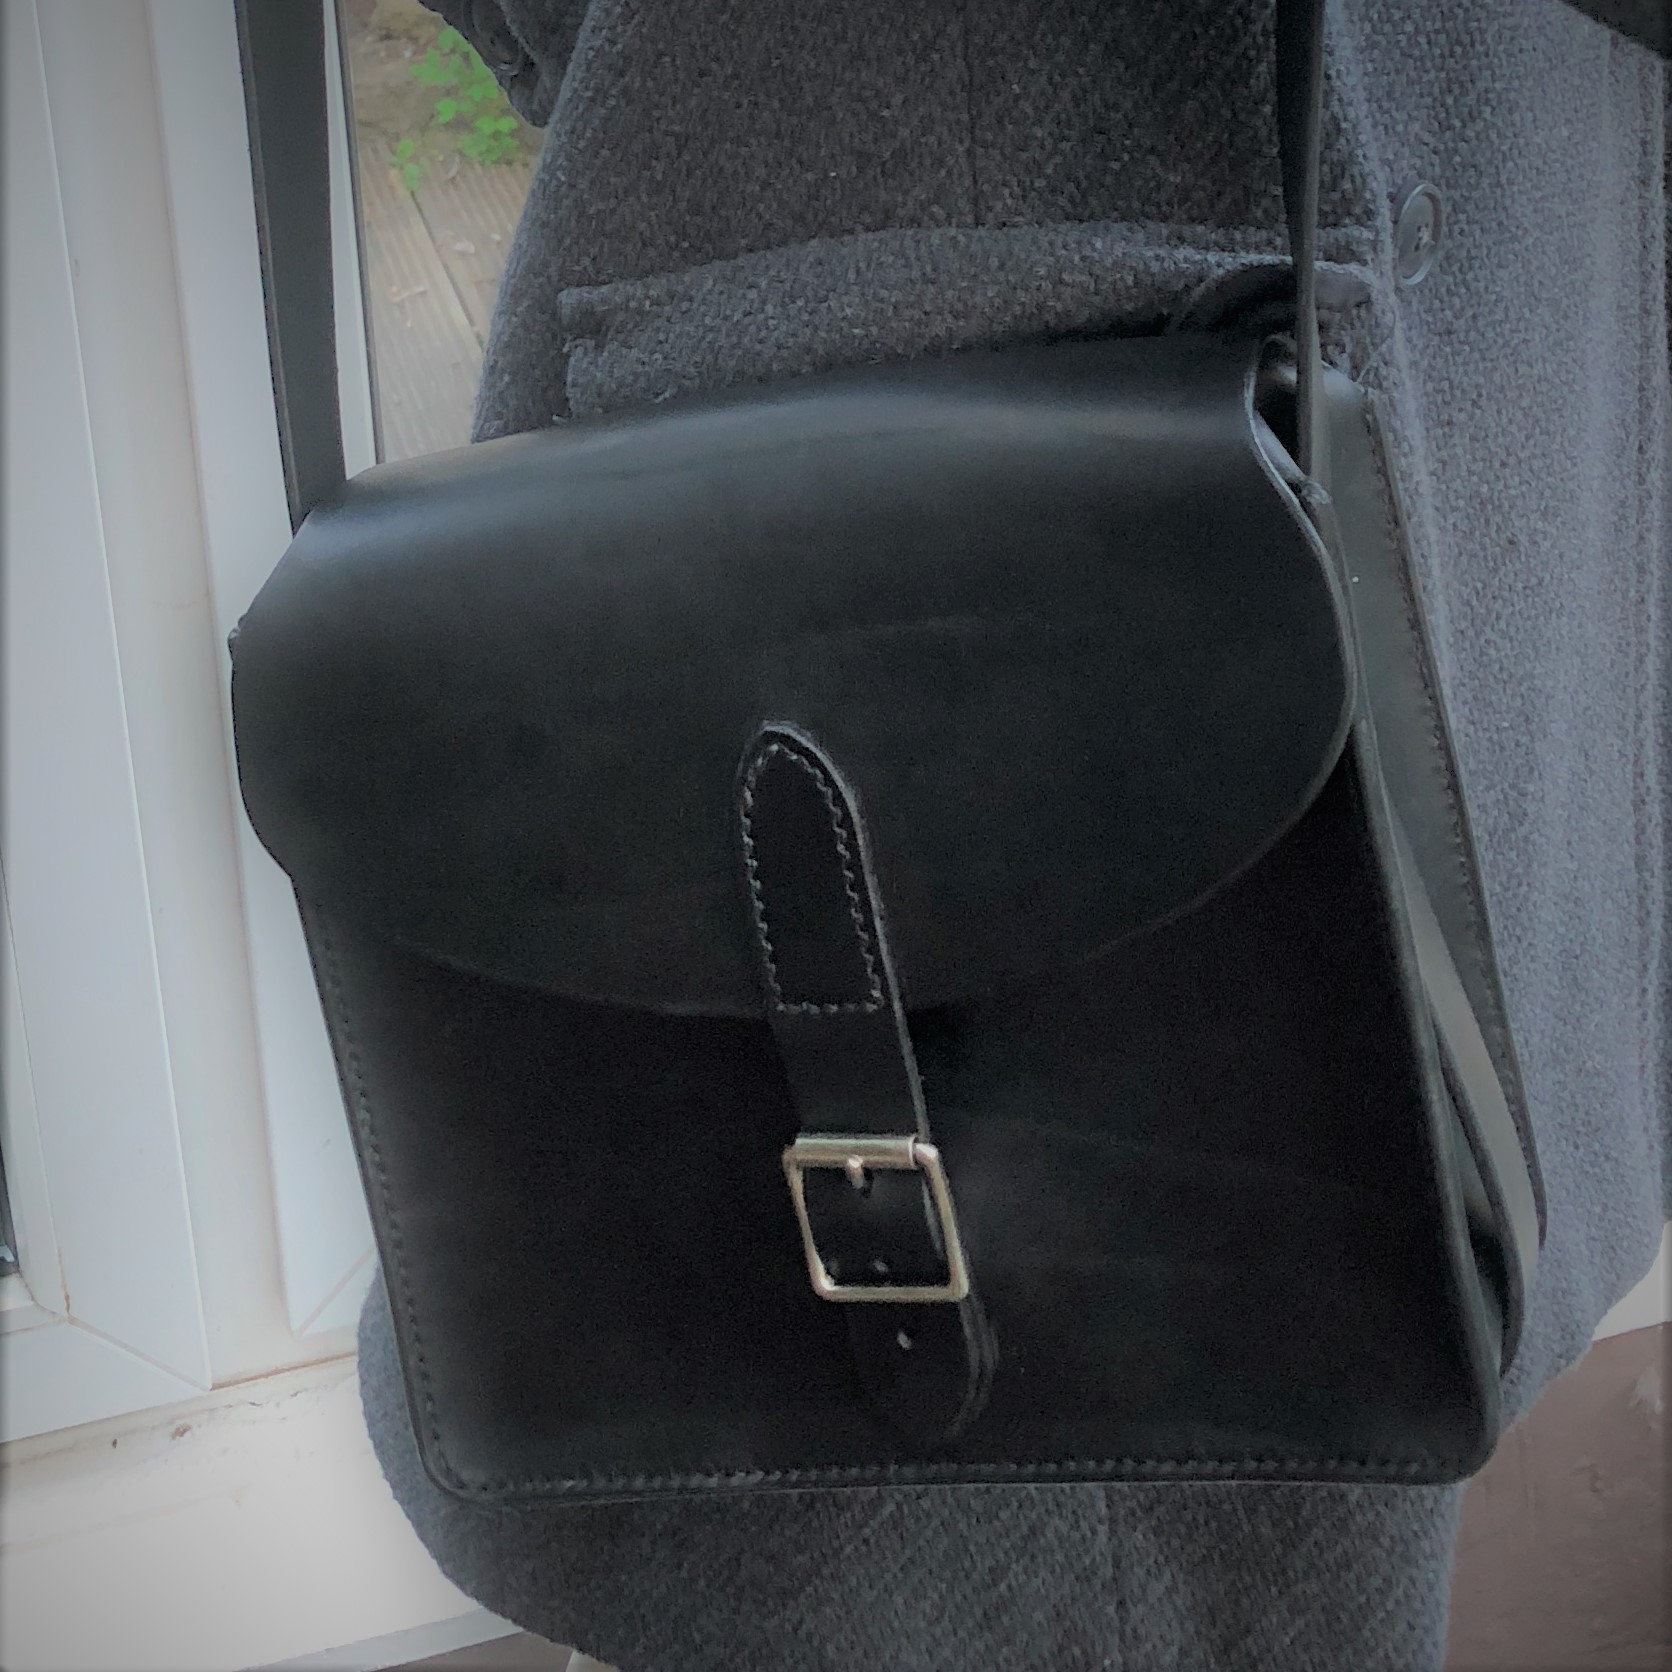 Boxy leather handbag